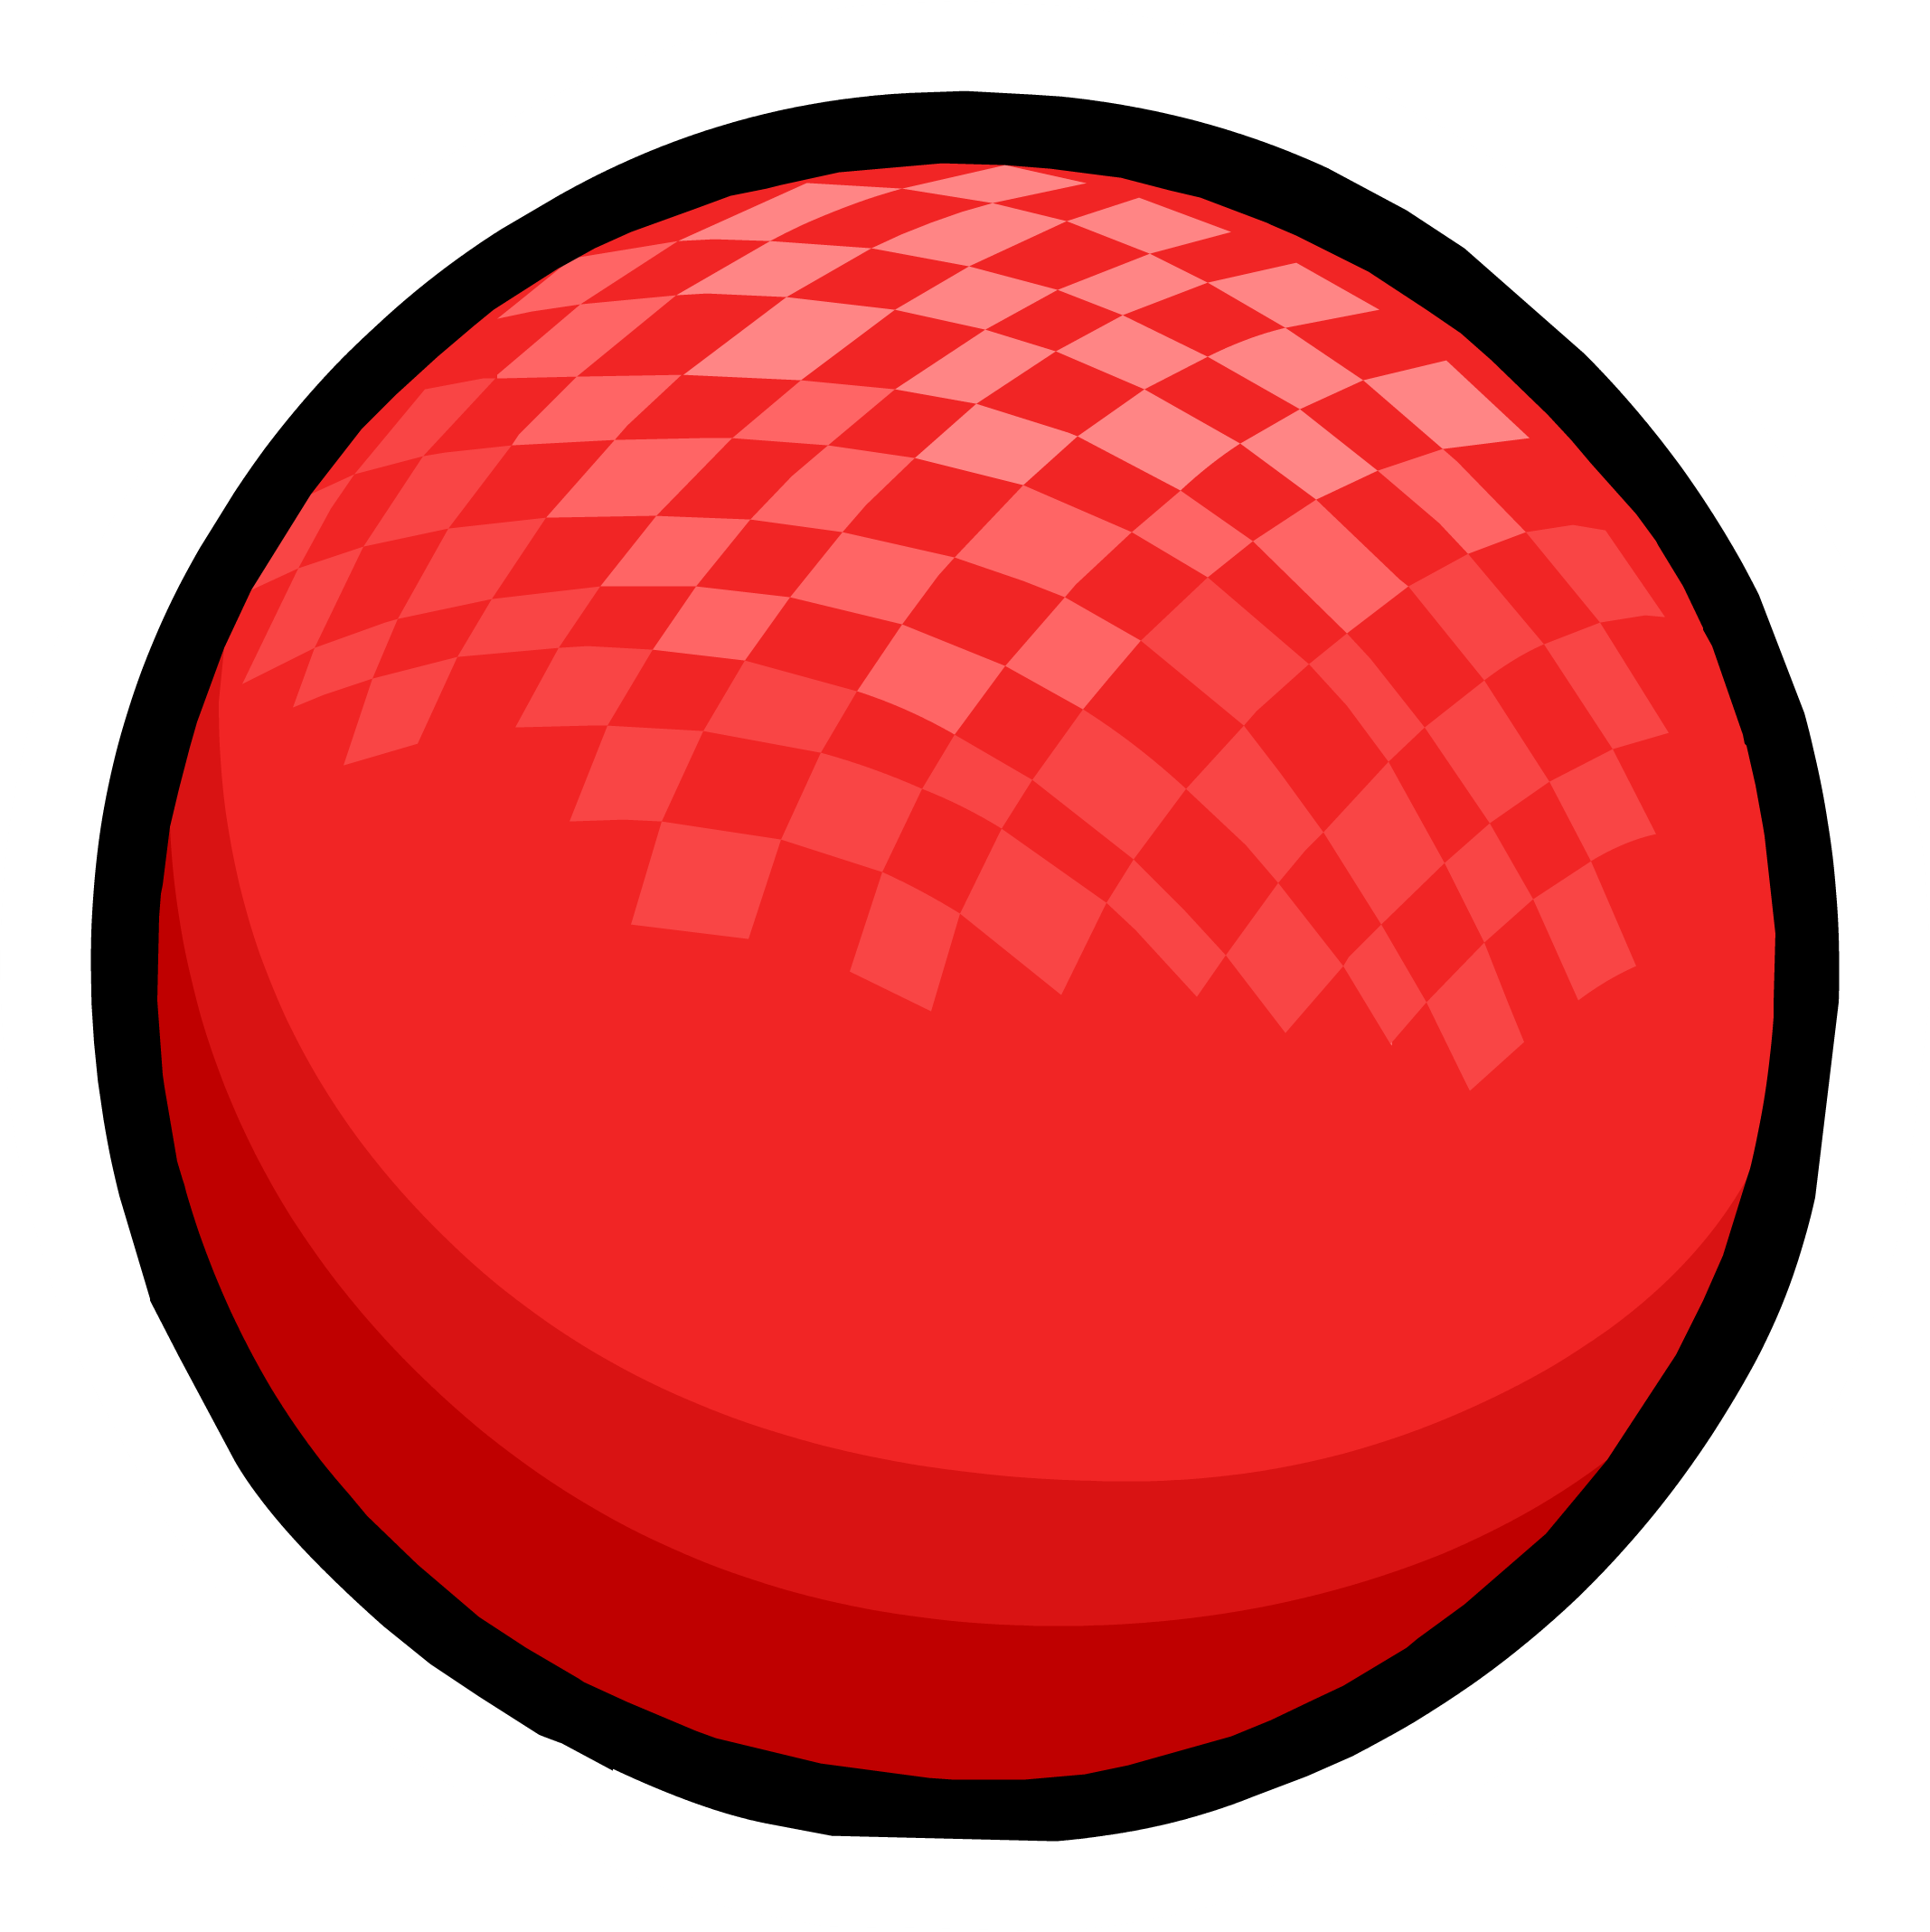 Free Dodgeball Tournament Cliparts, Download Free Dodgeball Tournament